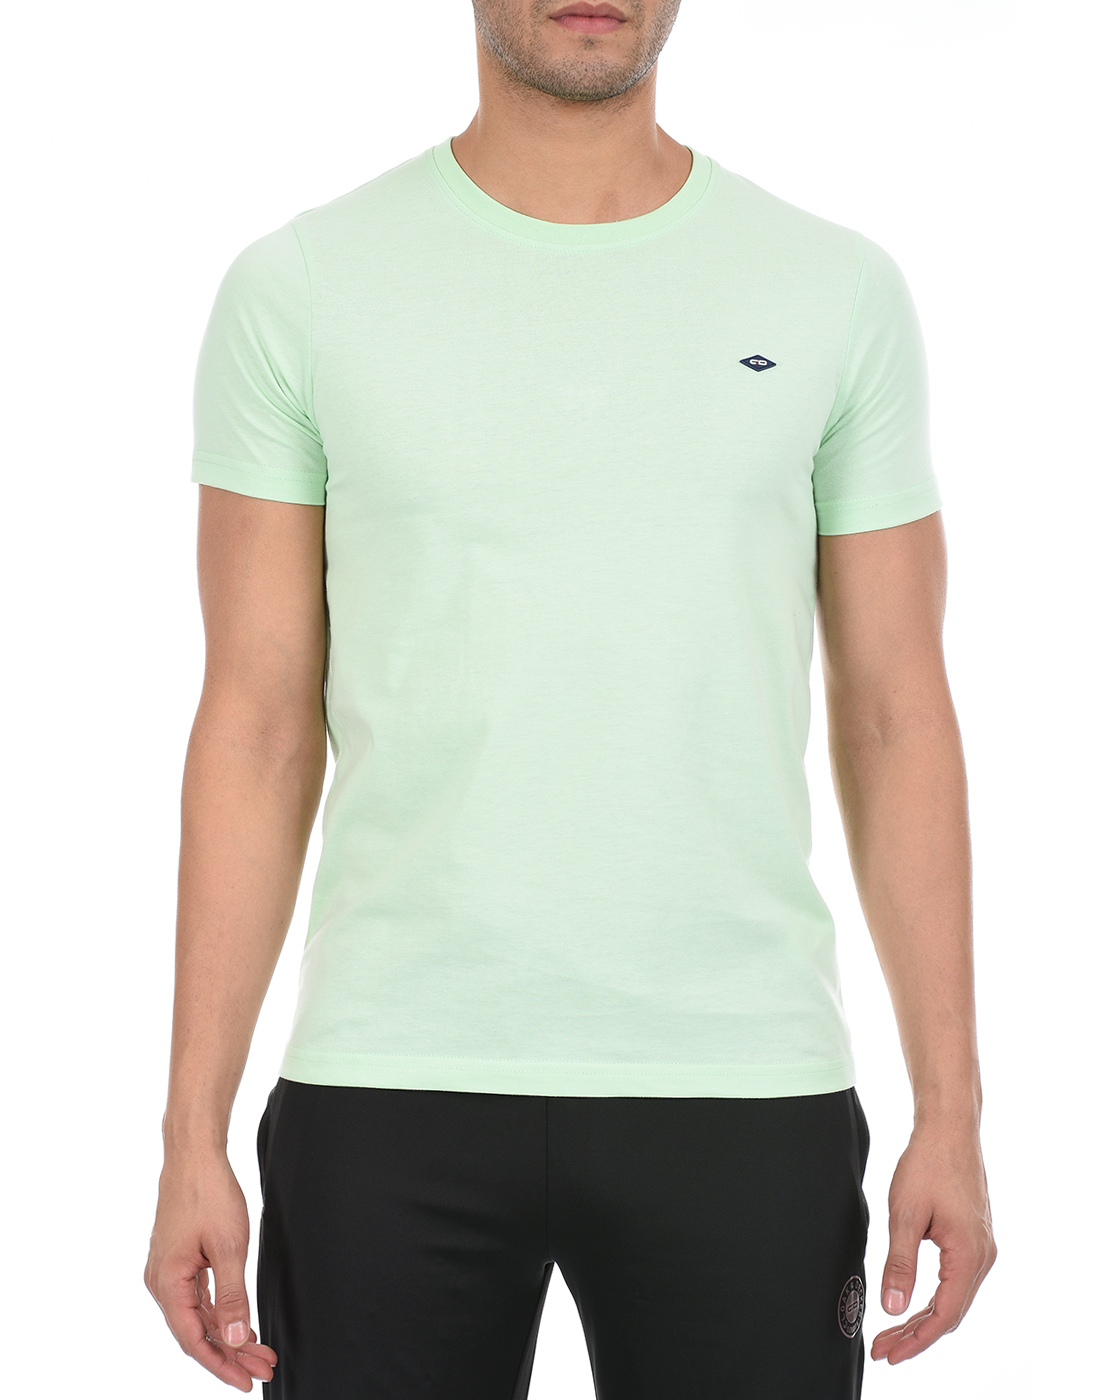 Cloak & Decker by Monte Carlo Men Solid Light Green T-Shirt